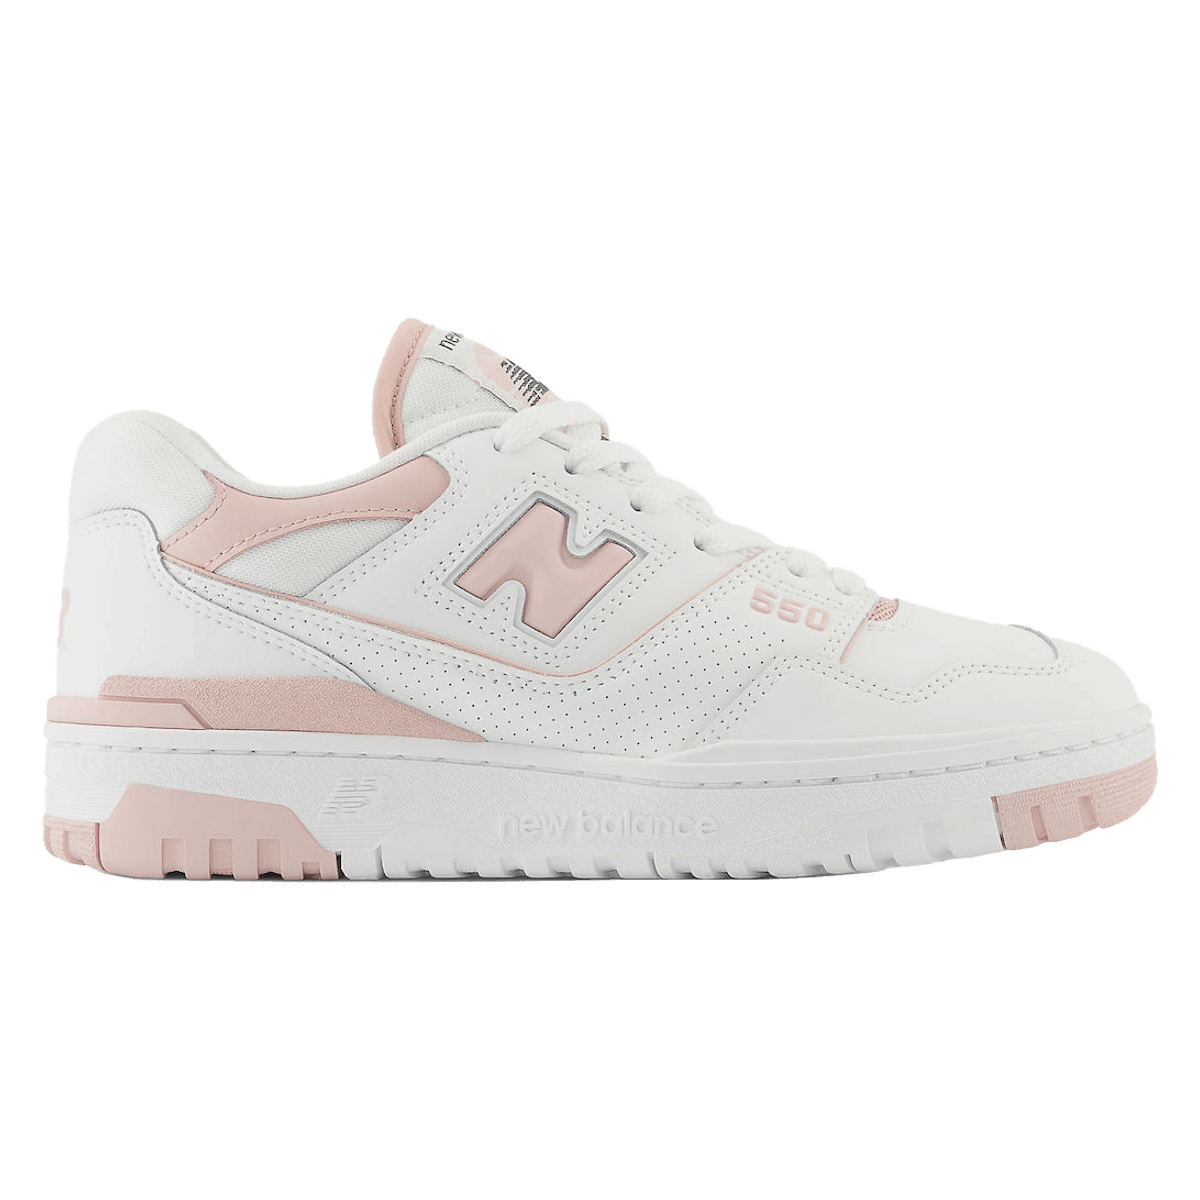 New Balance 550 "Pink White"